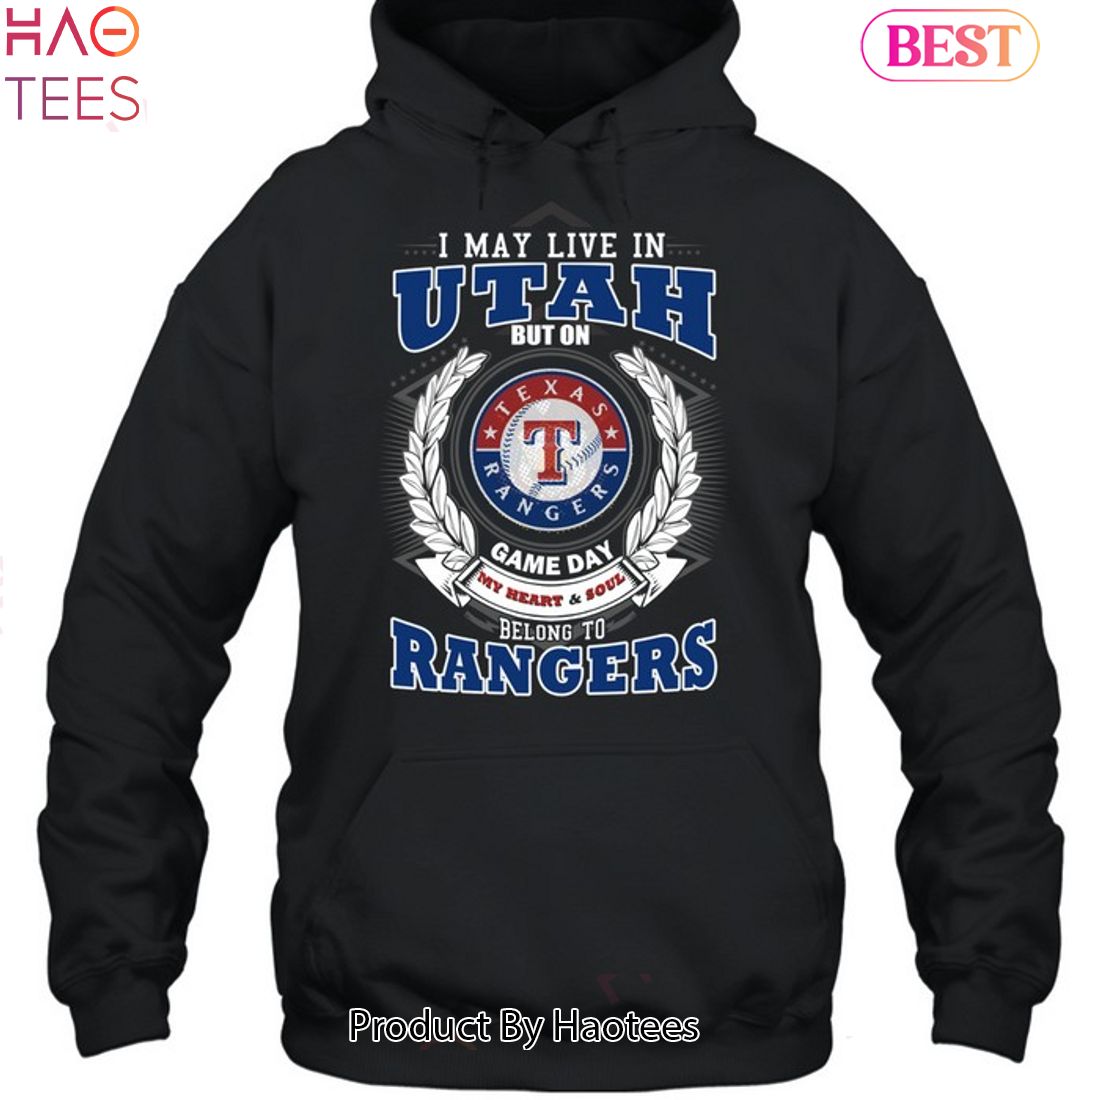 My heart Texas rangers team shirt, hoodie, sweatshirt for men and women